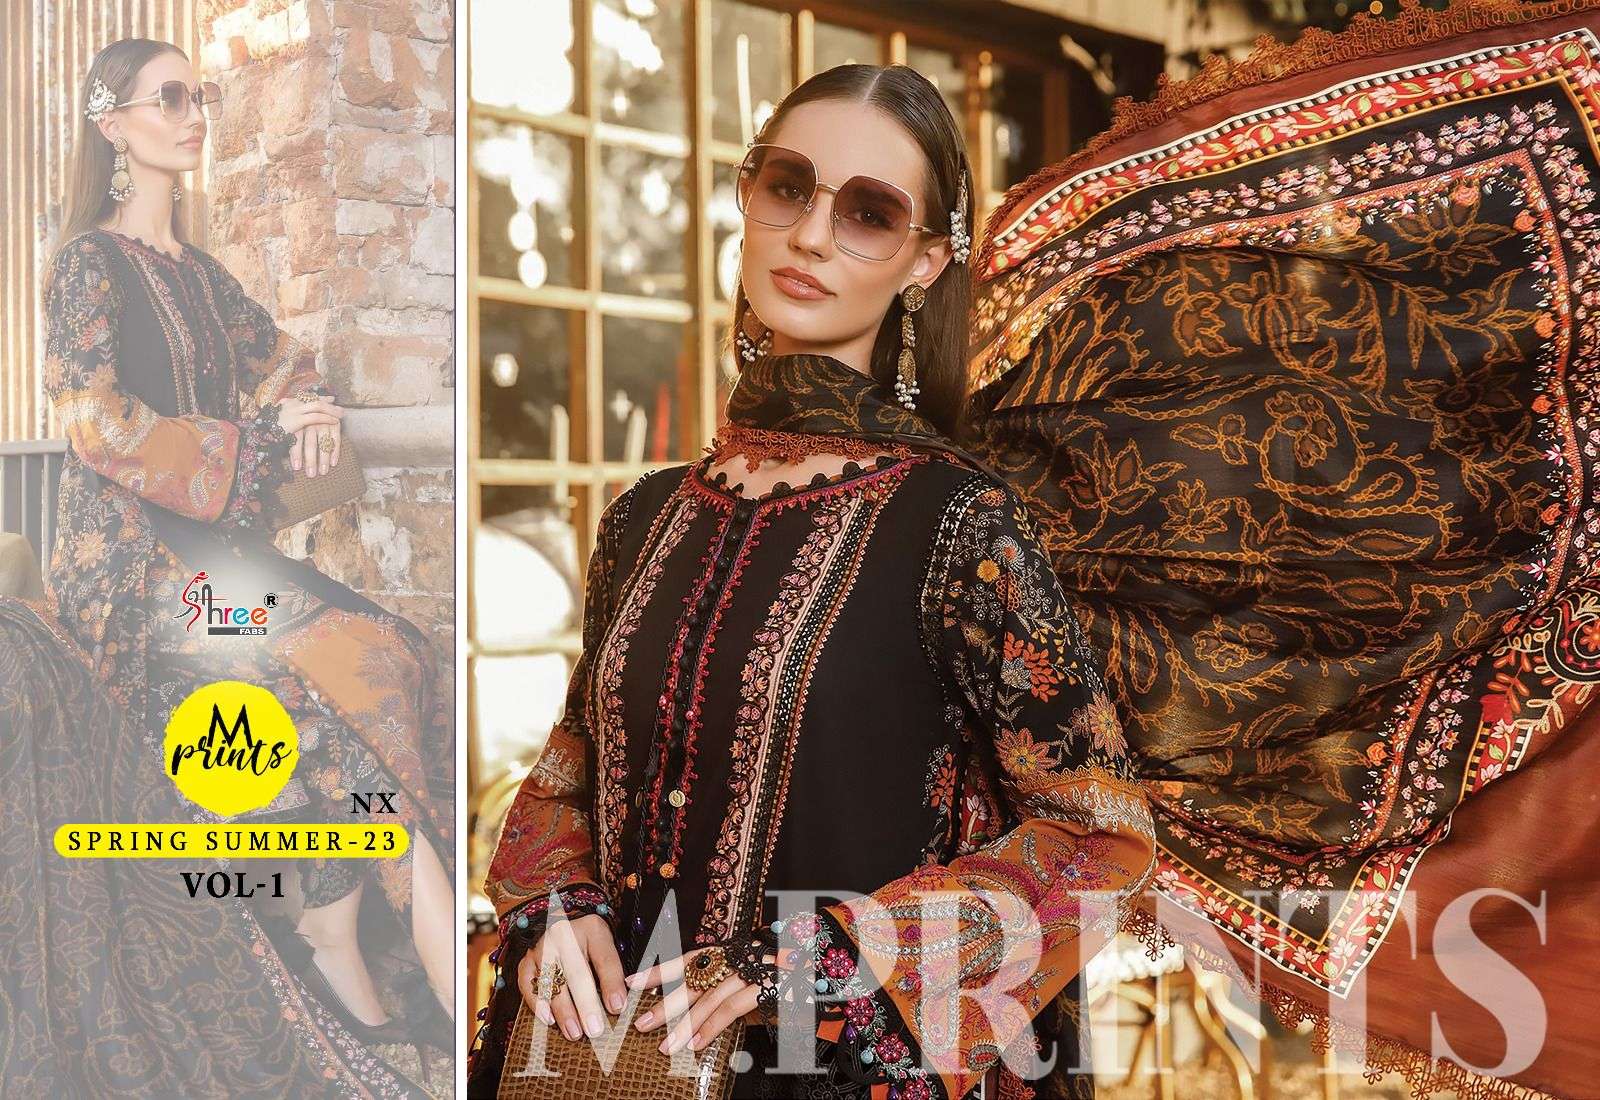 shree fabs m prints spring summer vol-1 nx 2576-2579 series stylish designer pakistani salwar suits manufacturer surat 